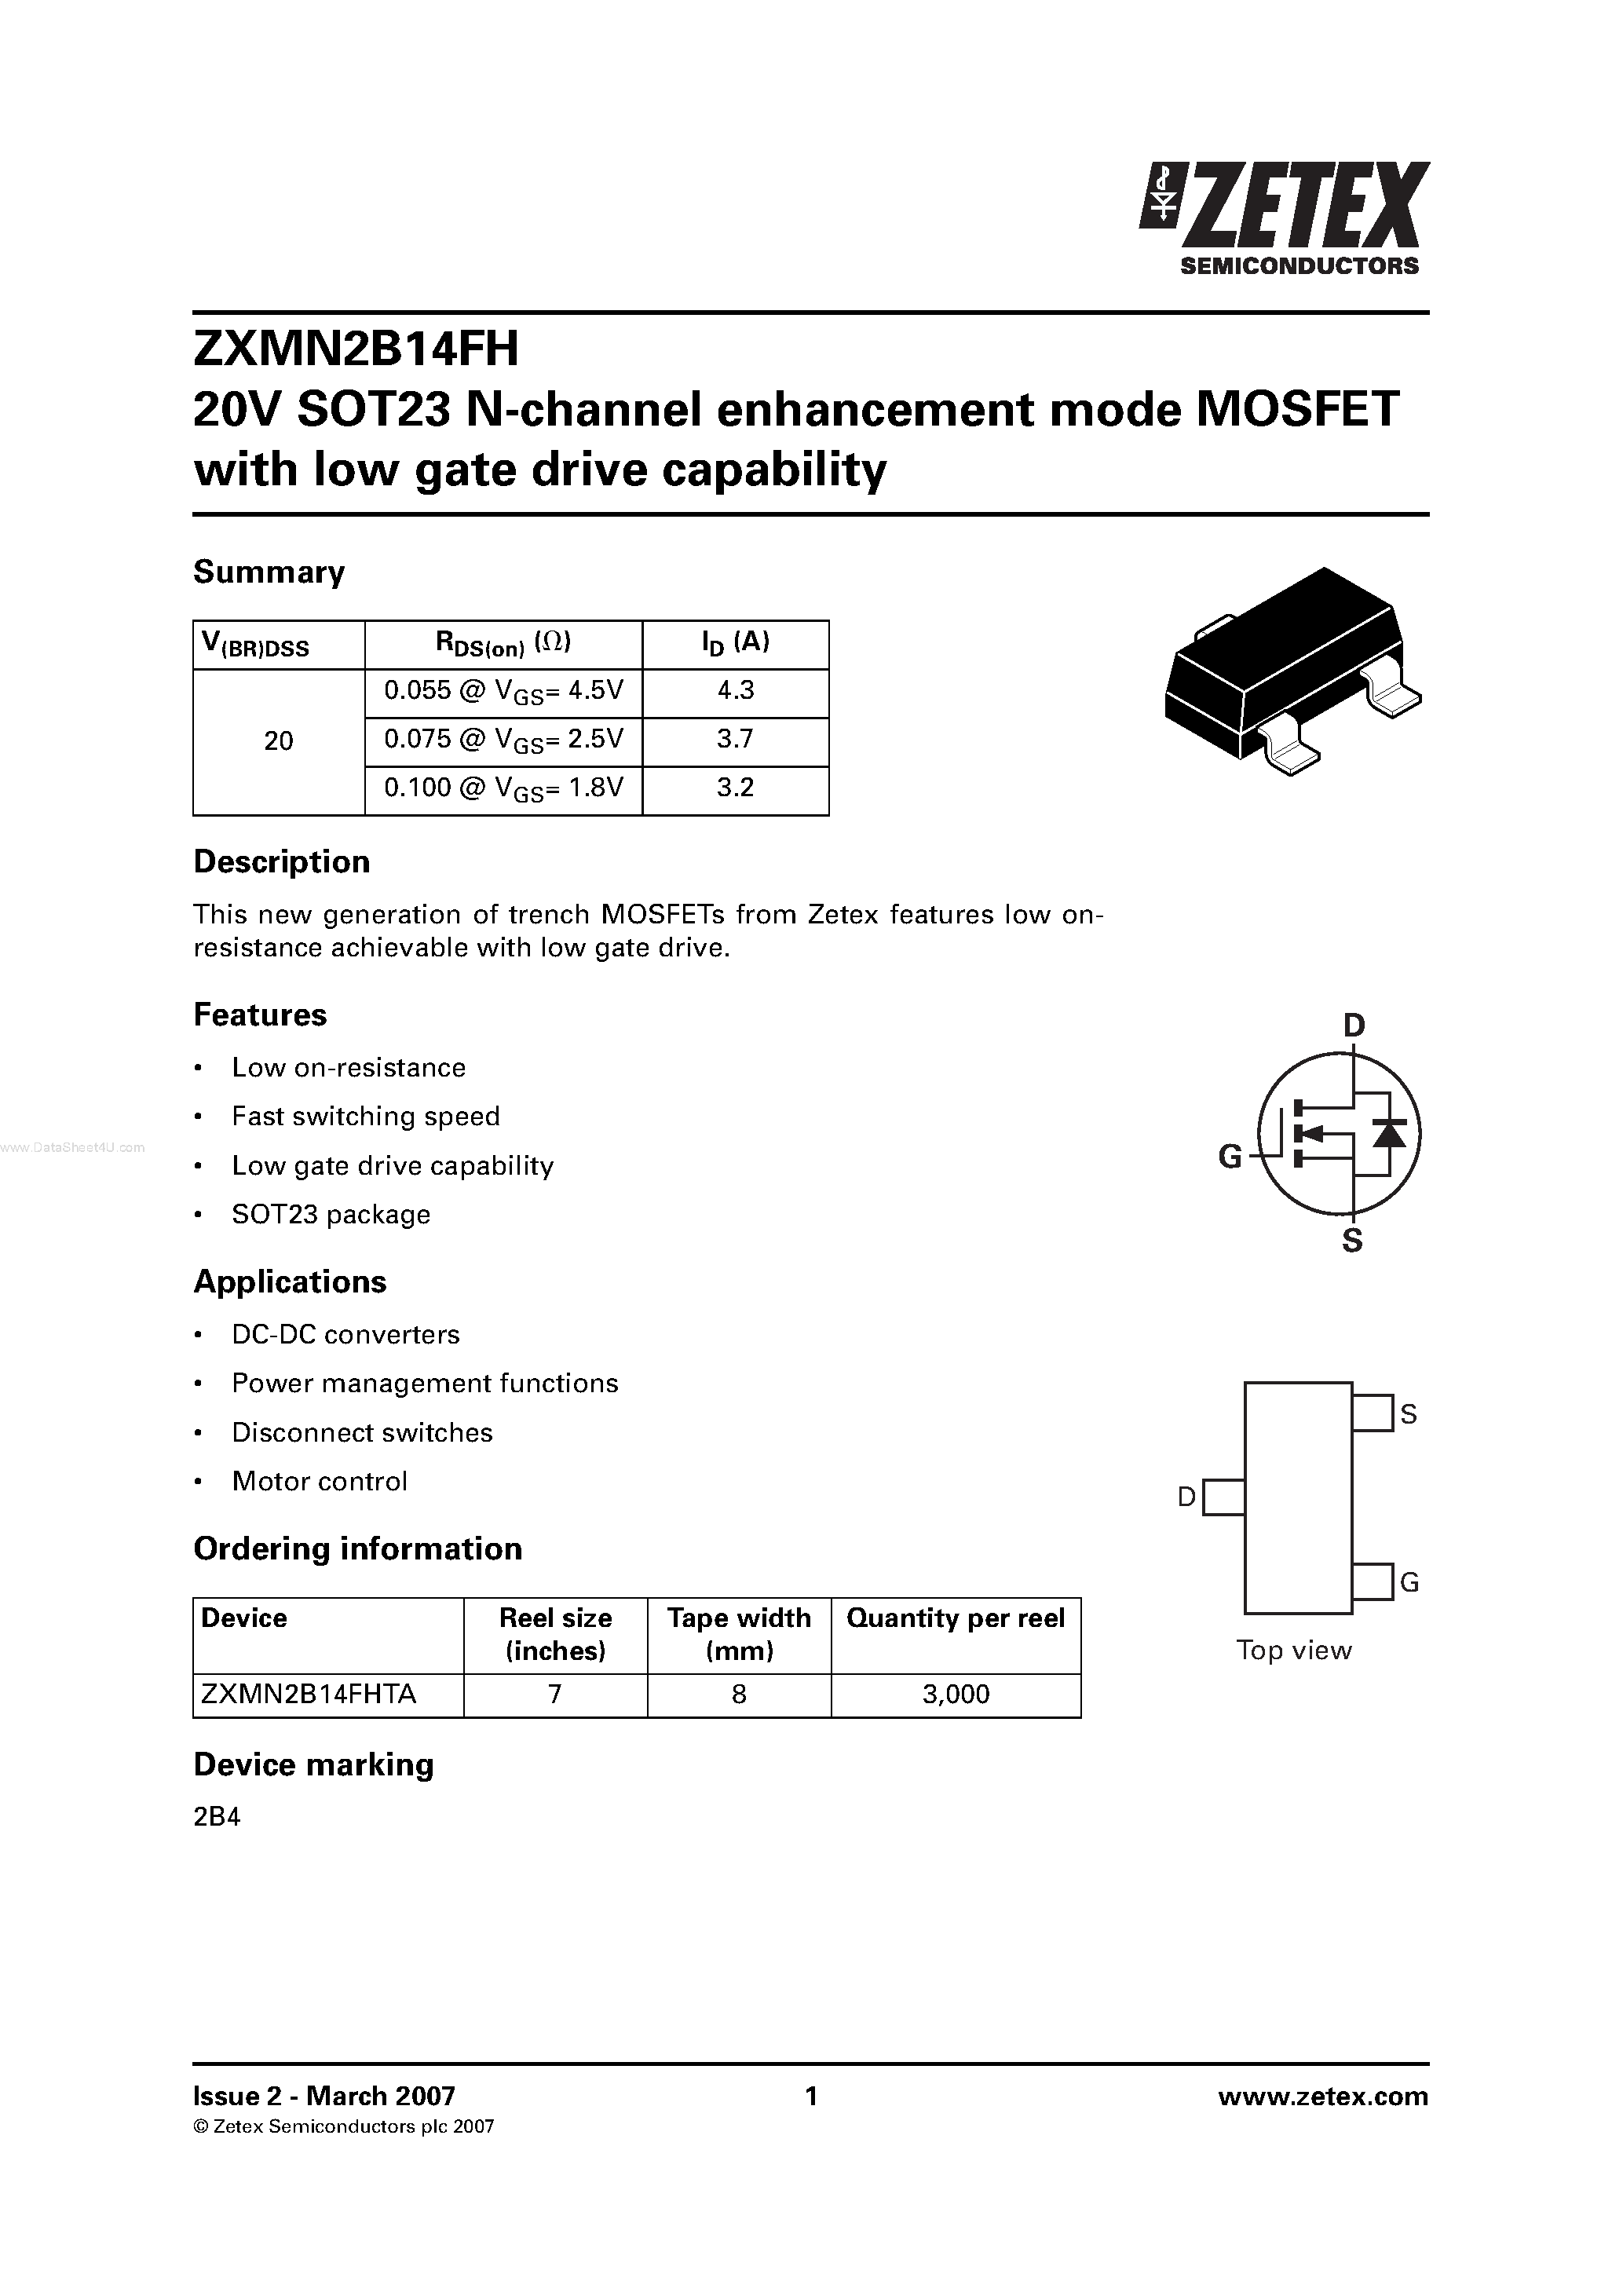 Datasheet ZXMN2B14FH - SOT23 N-channel enhancement mode MOSFET page 1